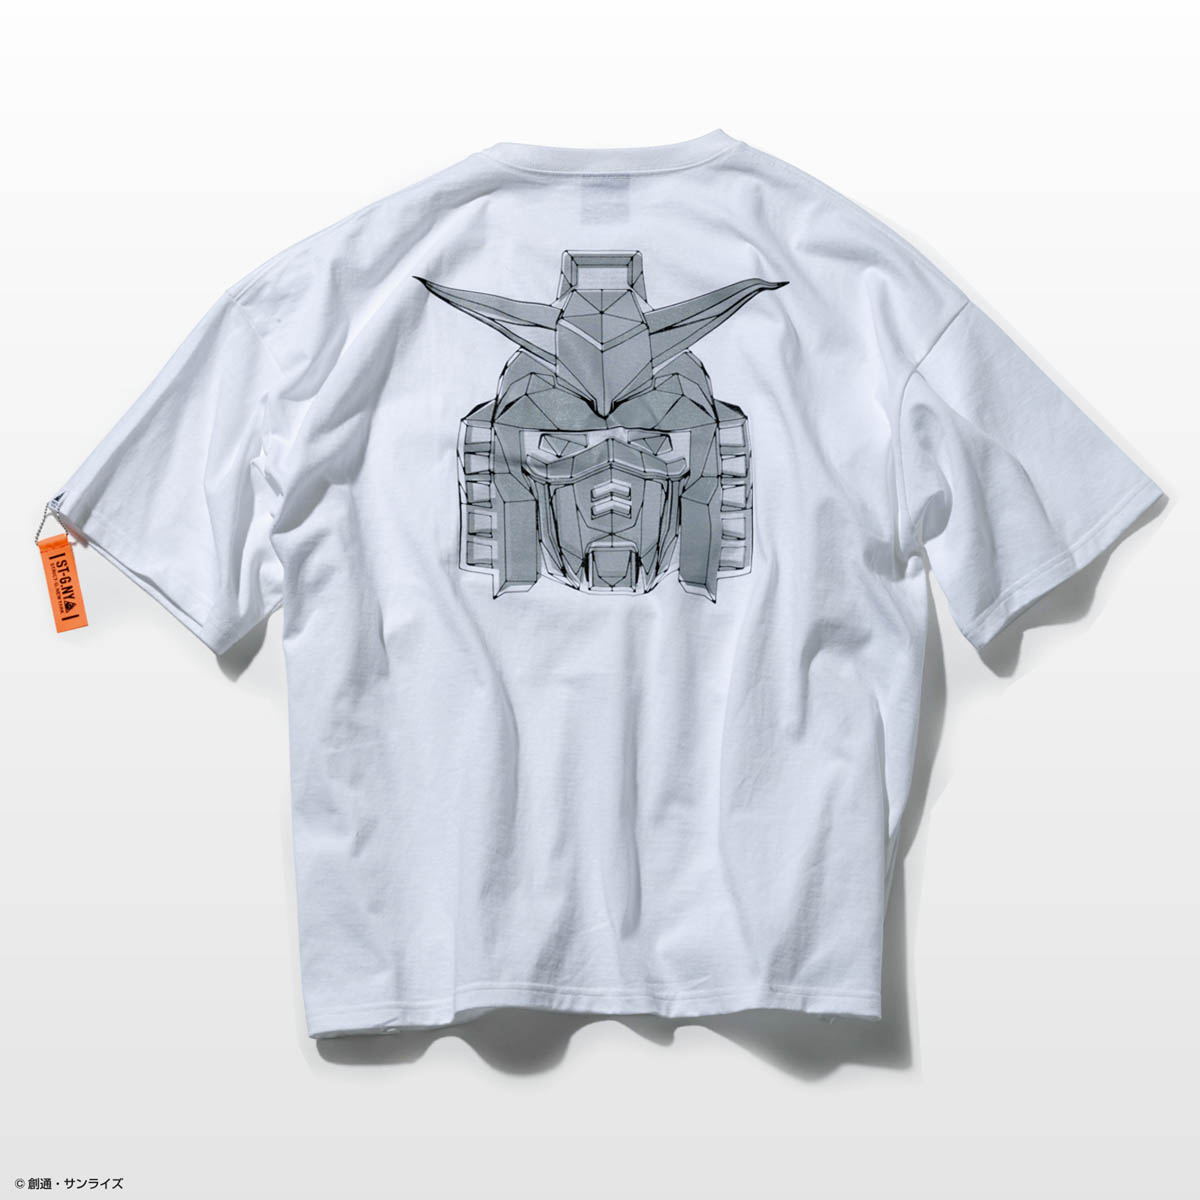 STRICT-G NEW YARK オーバーサイズポケット付きTシャツ ポリゴンガンダム